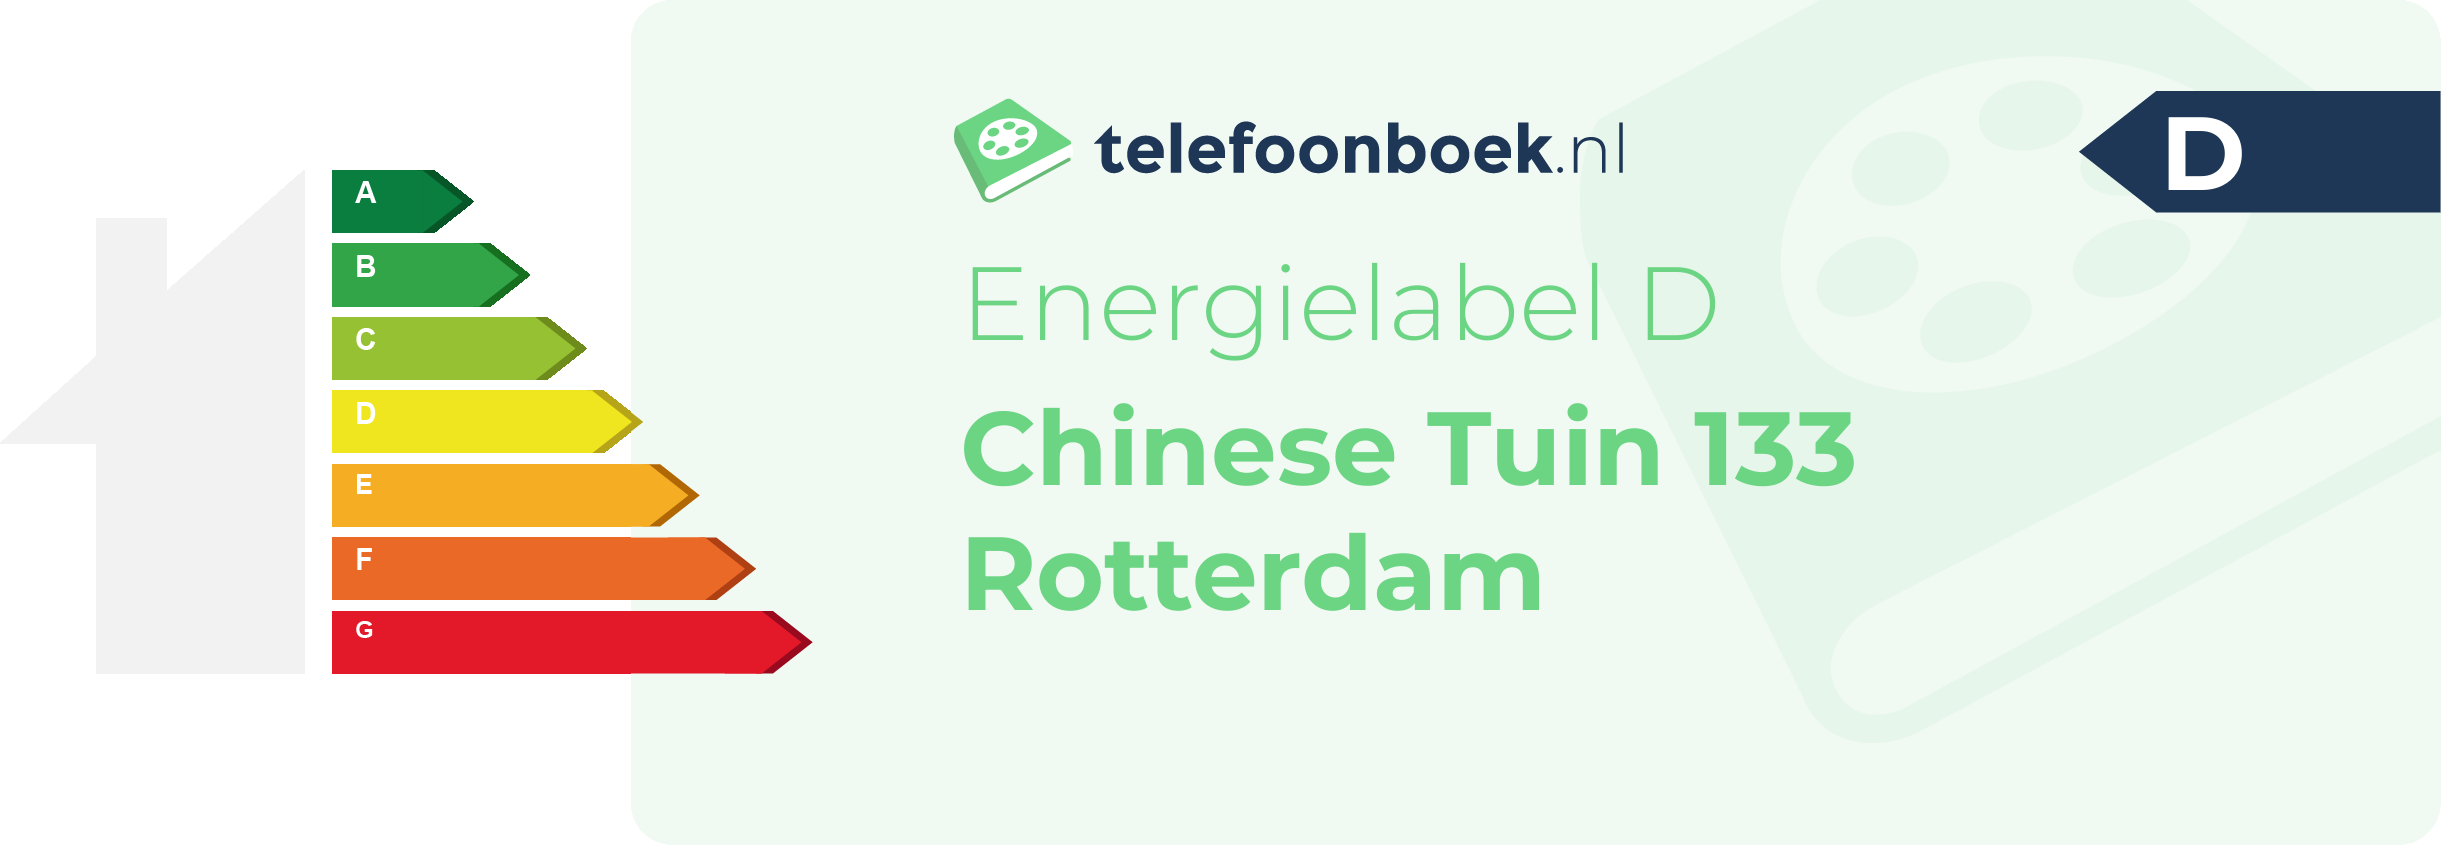 Energielabel Chinese Tuin 133 Rotterdam